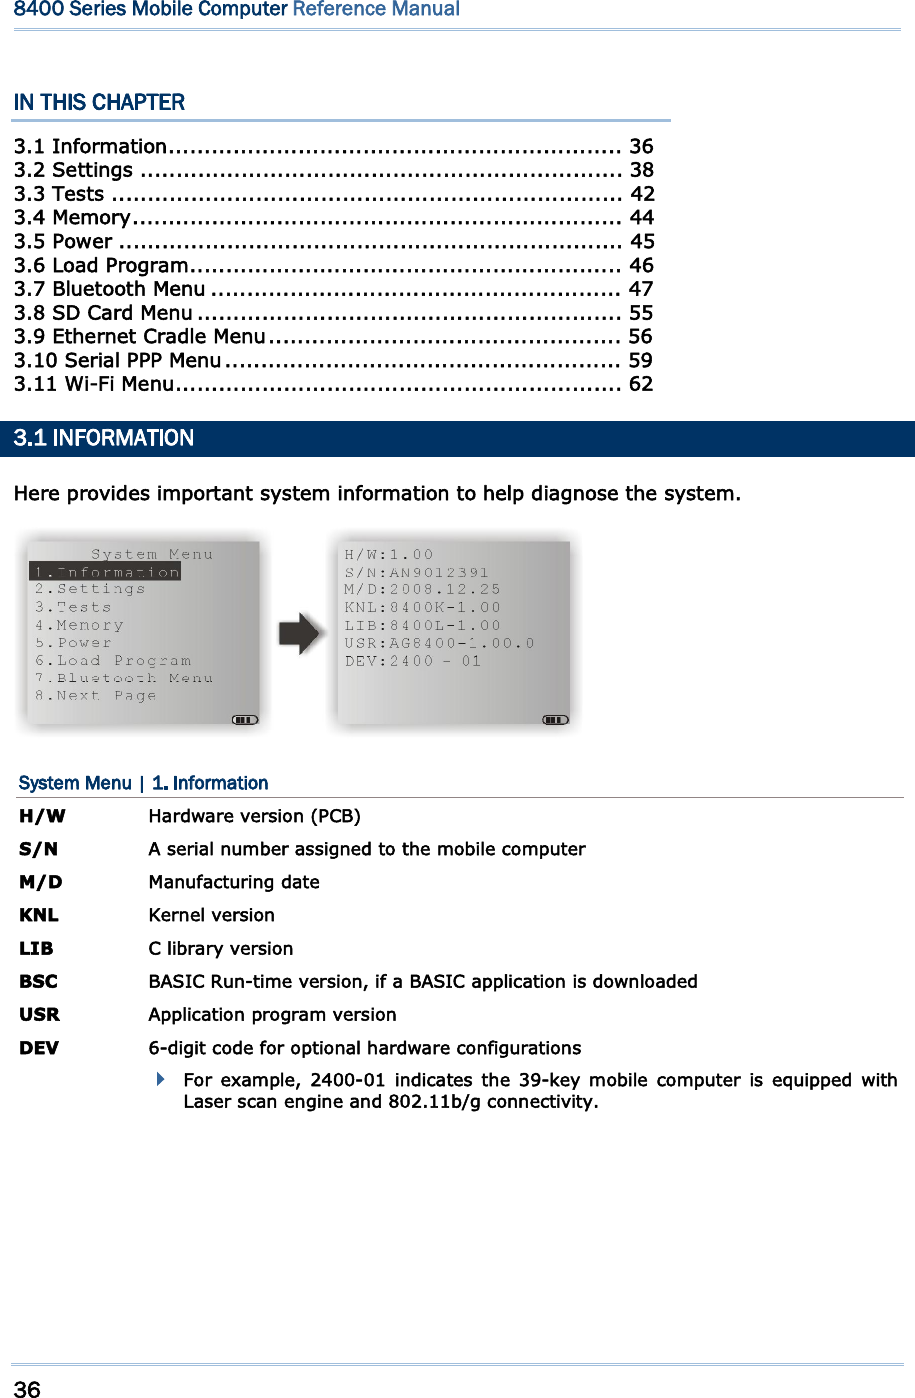 Cipherlab 8400 Terminal User Manual 8400 Usermanual